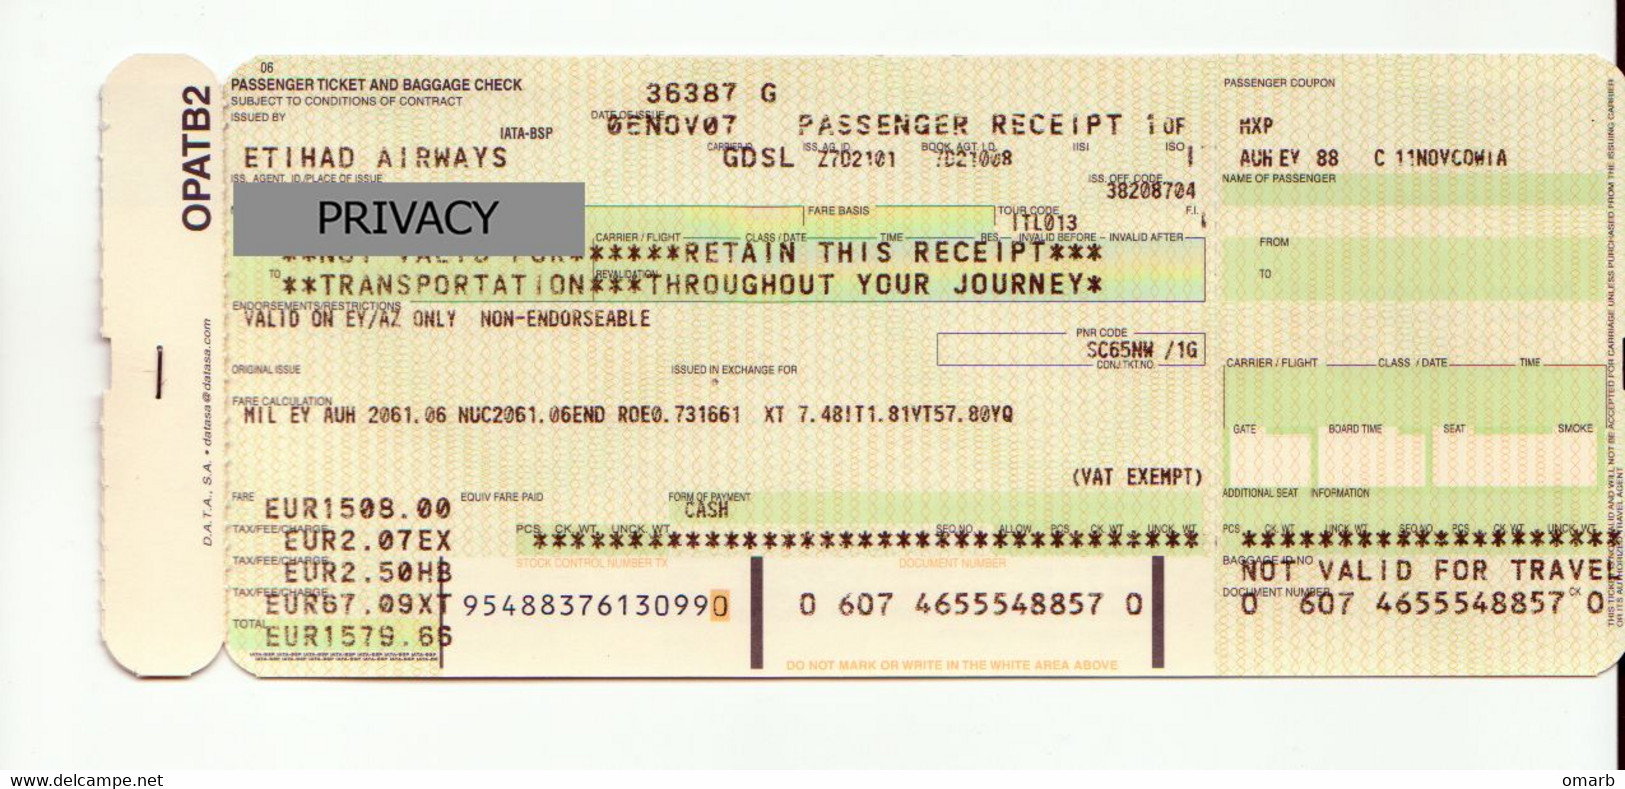 Alt1126 Etihad Airways Billets Avion Ticket Biglietto Aereo Boarding Passenger Receipt Imbarco Milano Abu Dhabi EAU 2007 - Welt